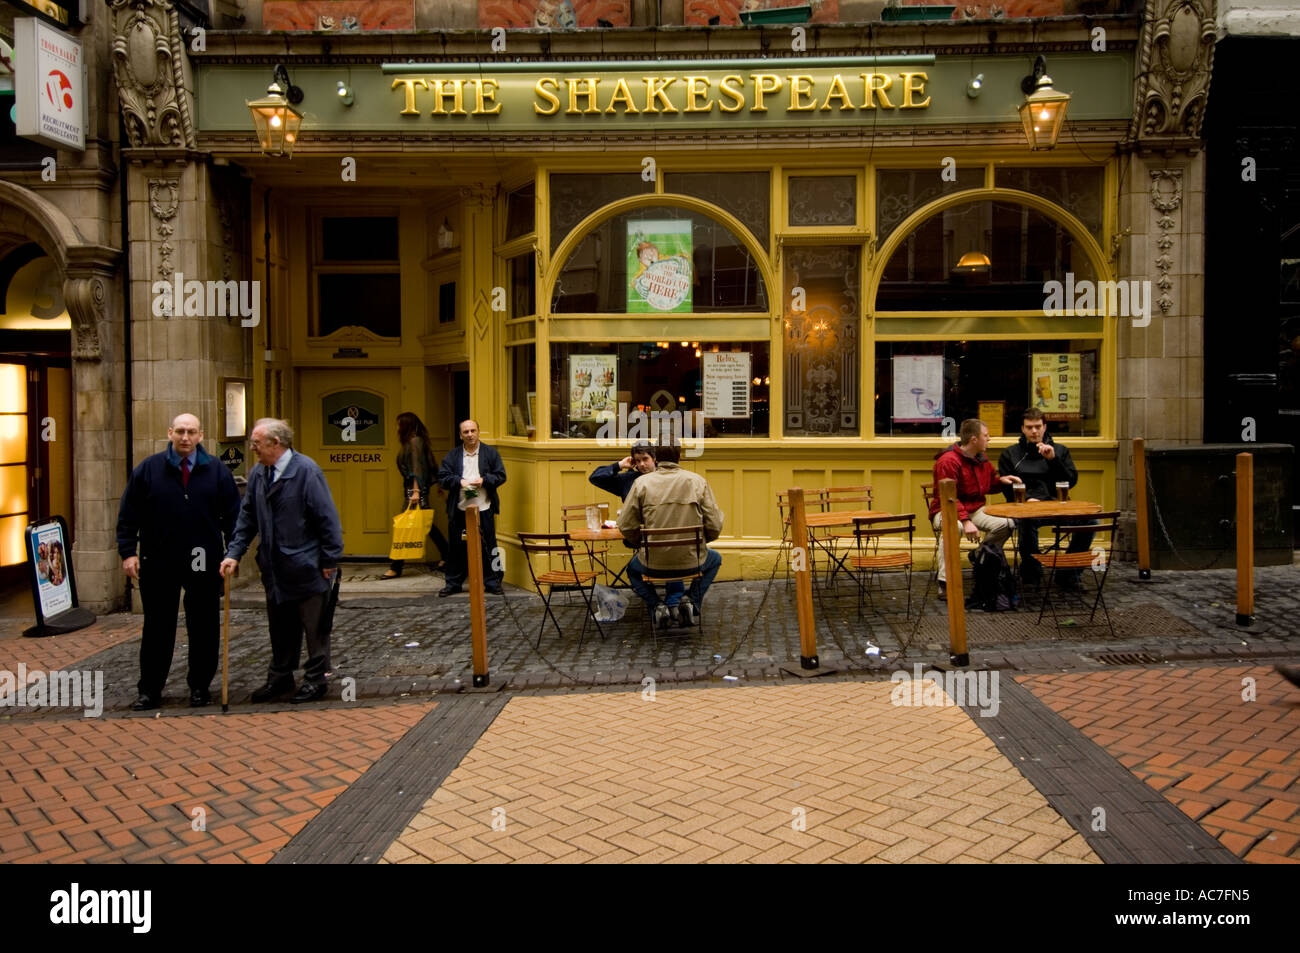 people drinking outside The Shakespeare City centre pub, Birmingham England UK Stock Photo